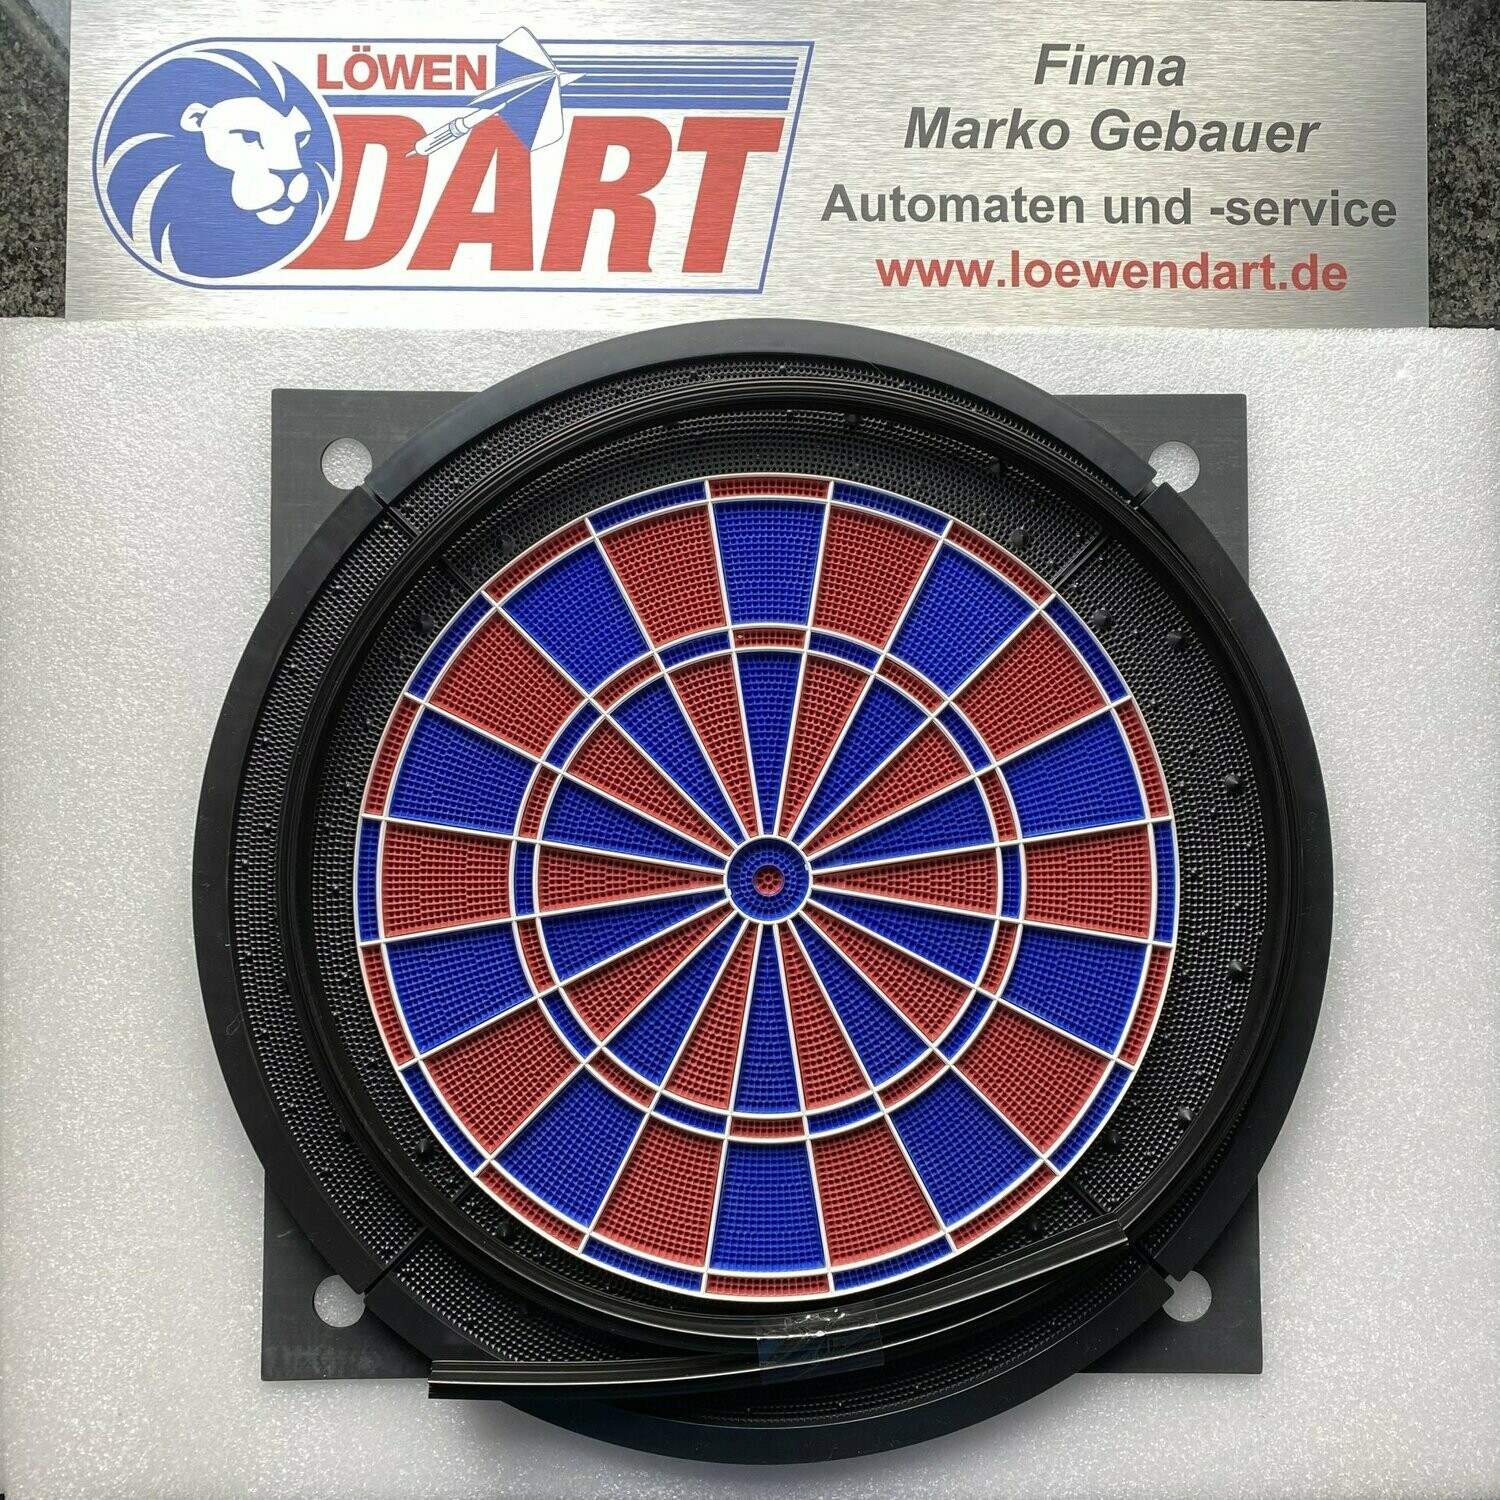 darts wm free live stream